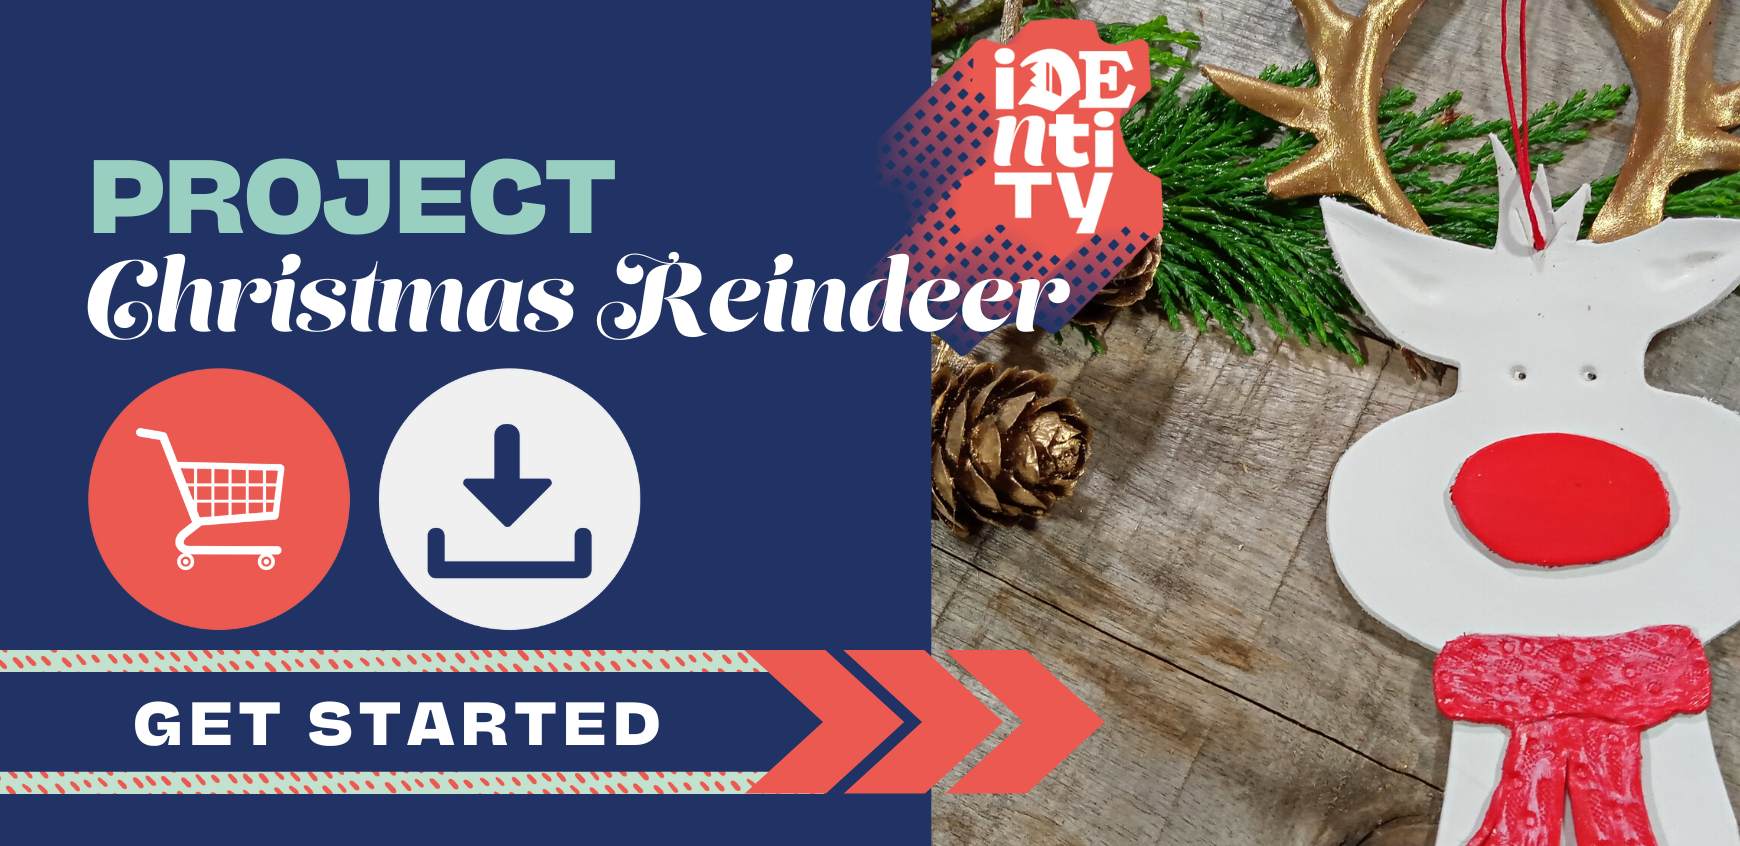 Project Christmas Reindeer